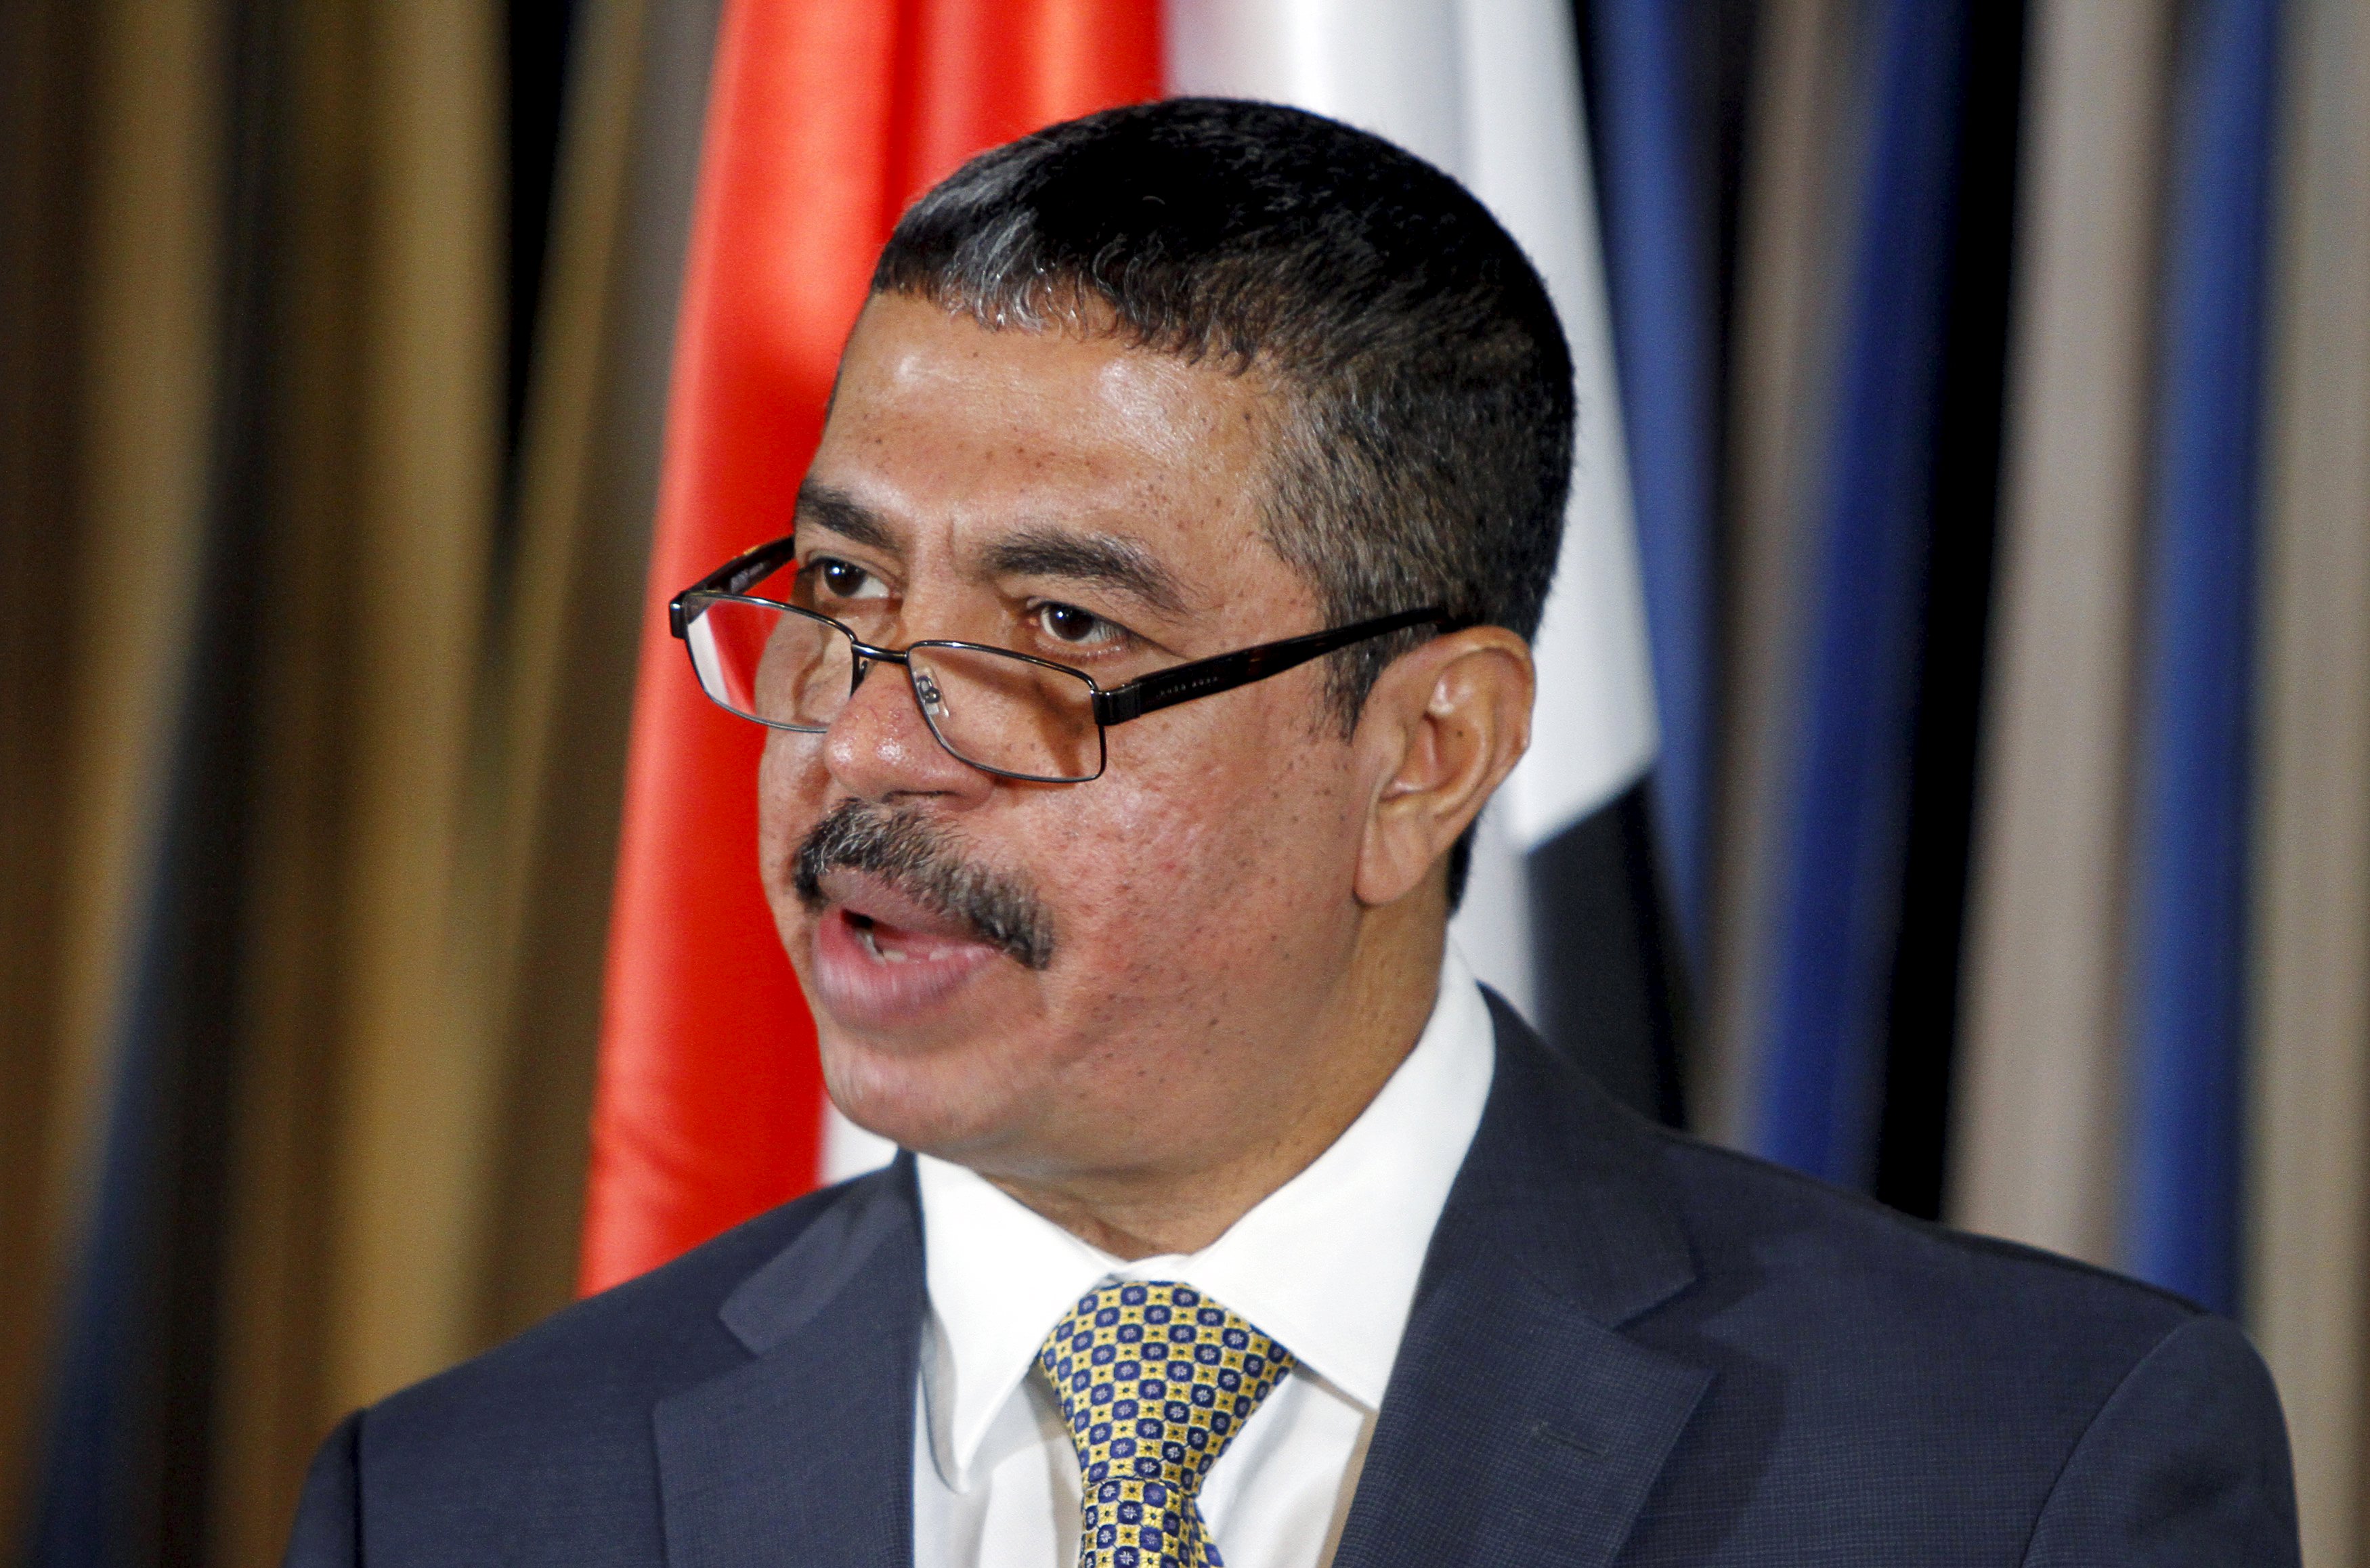 Yemen: Hadi sacks prime minister Bahah, appoints new senior team